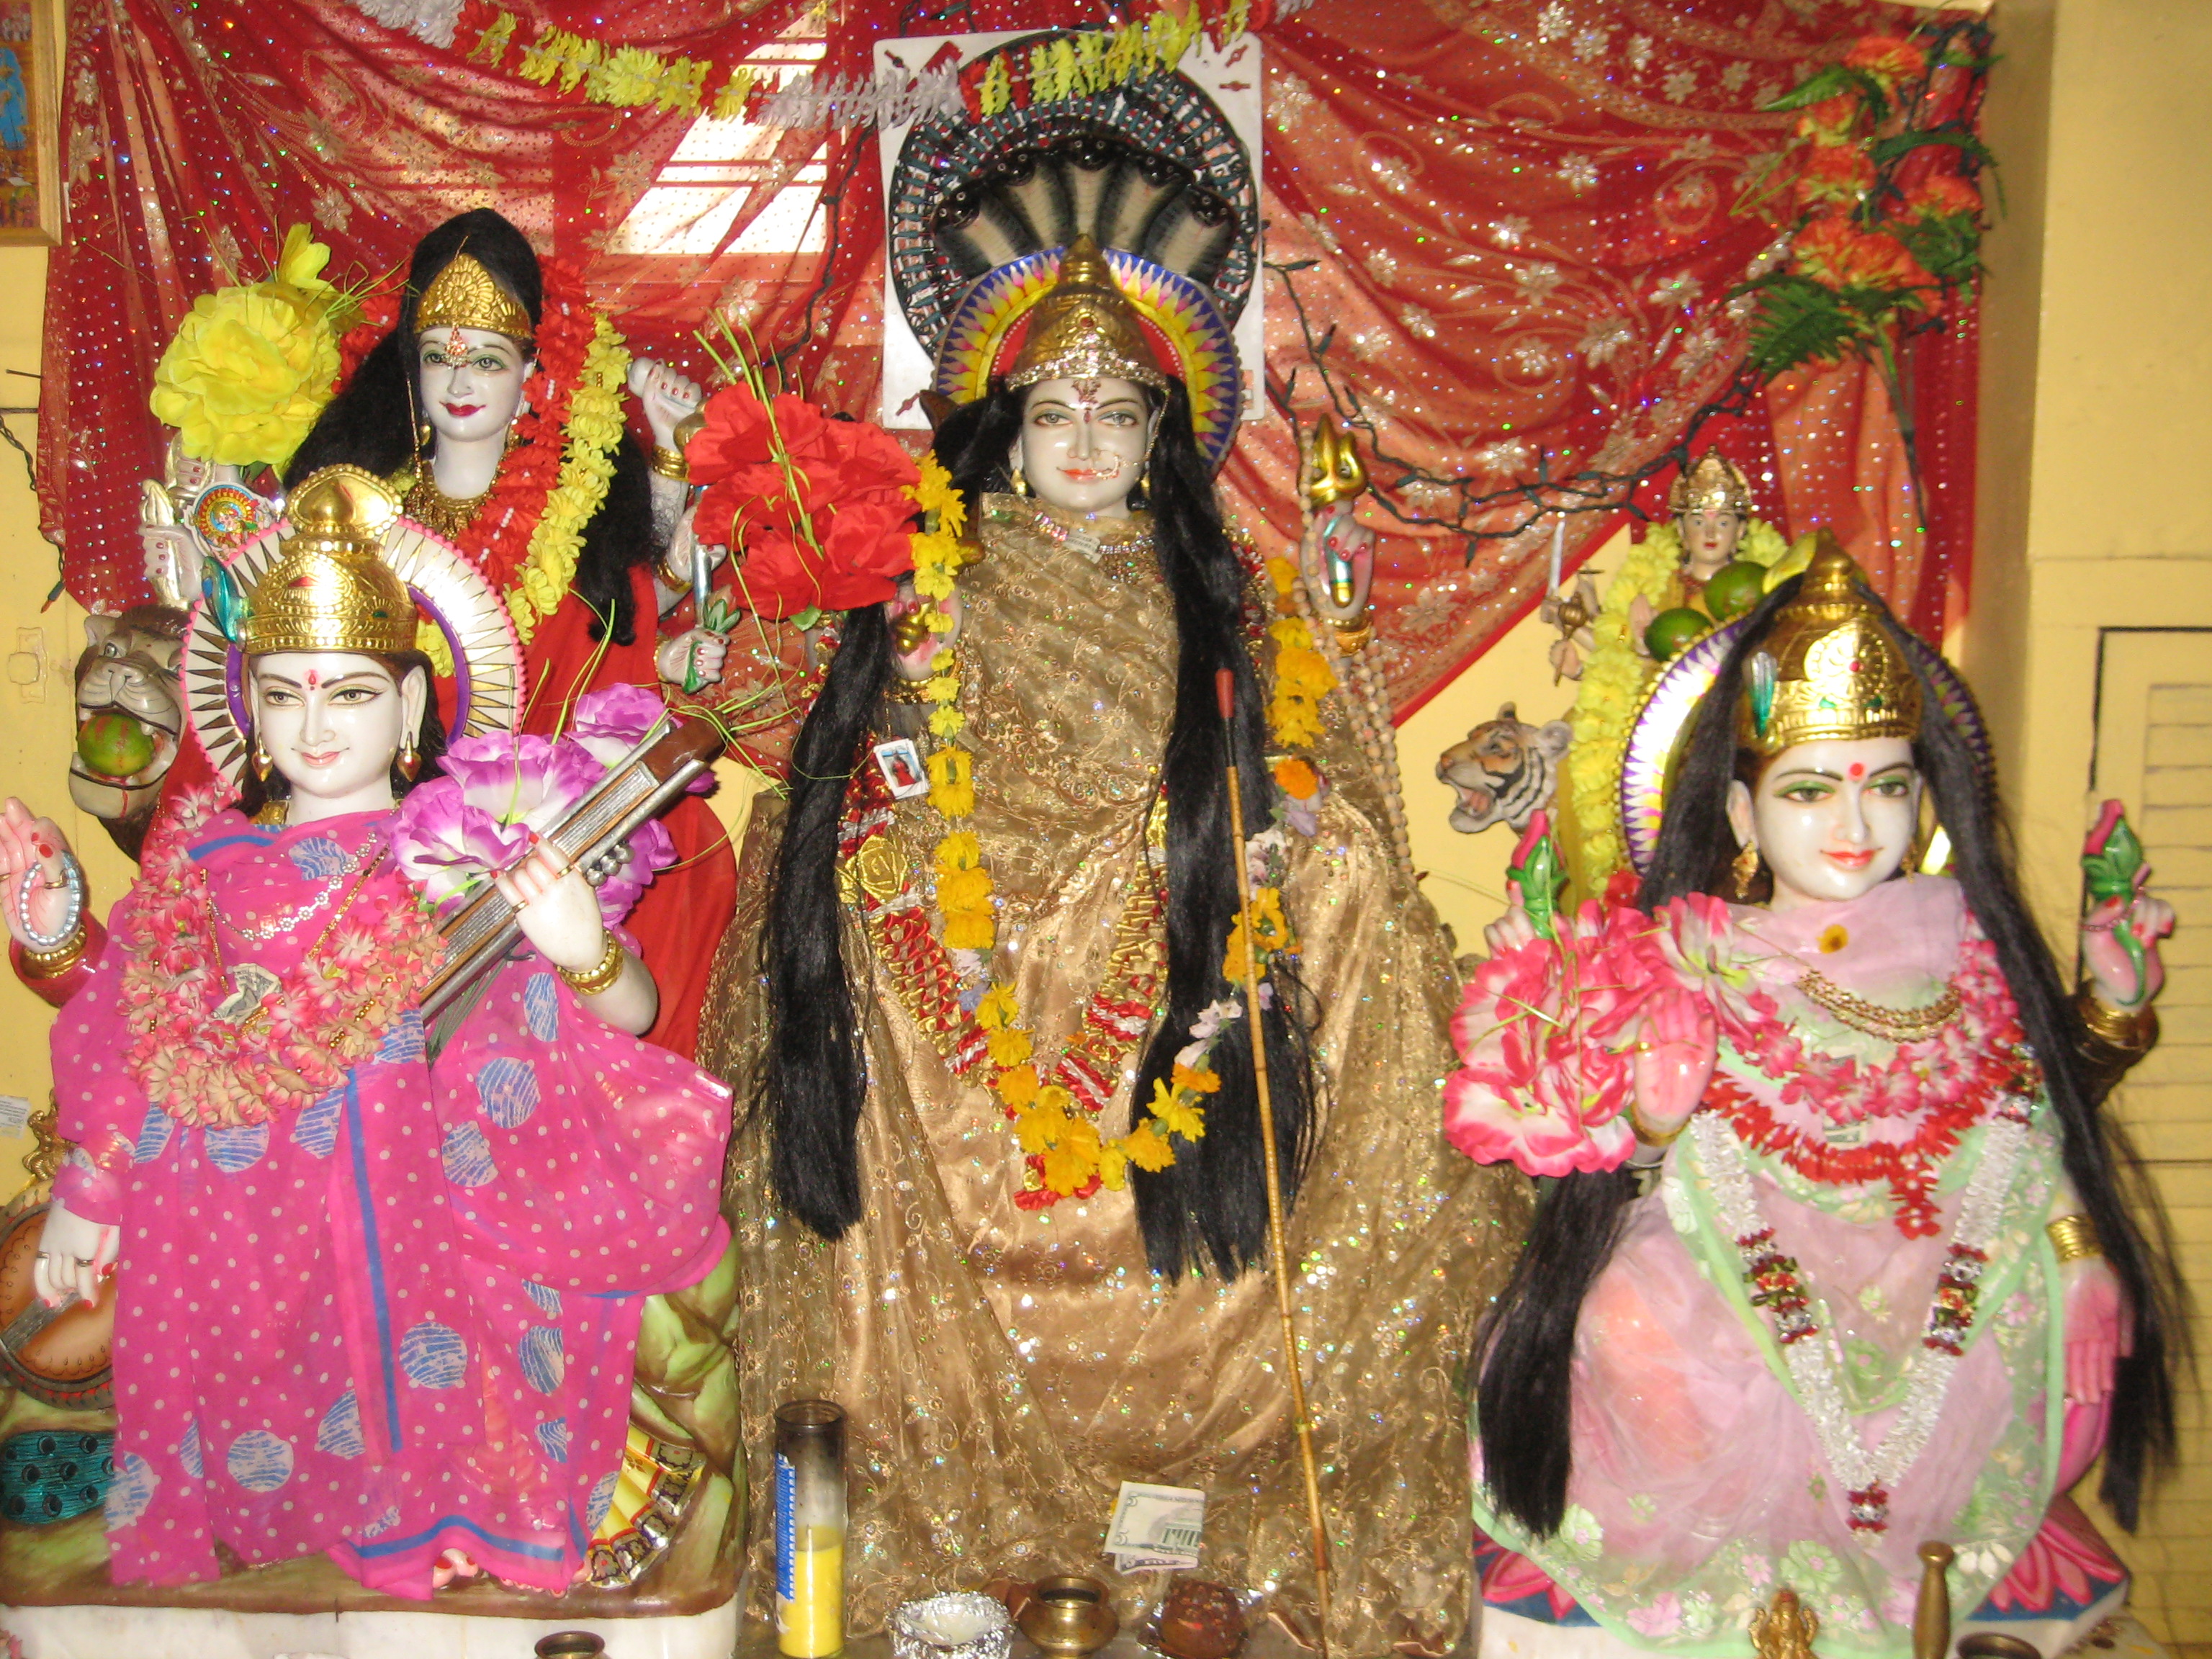 Saat Kali Devi Temple